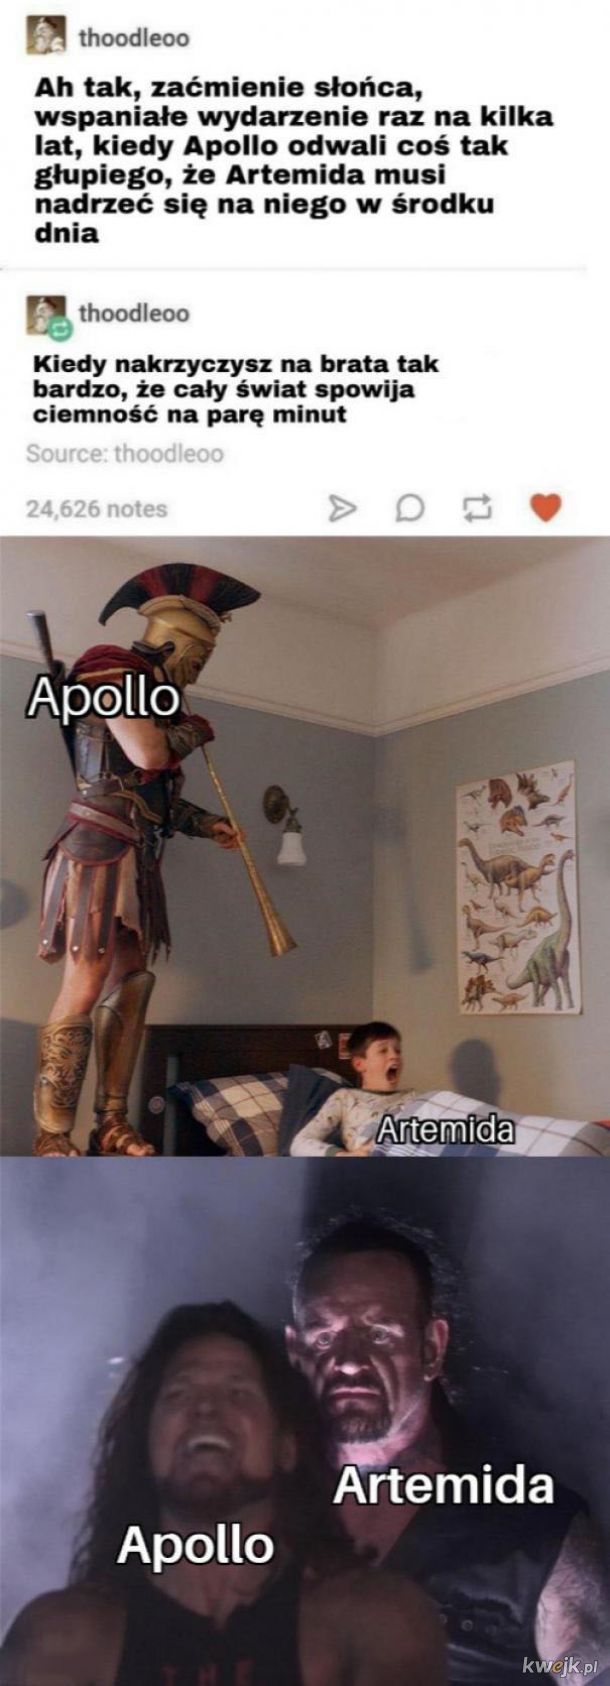 Apollo i Artemida